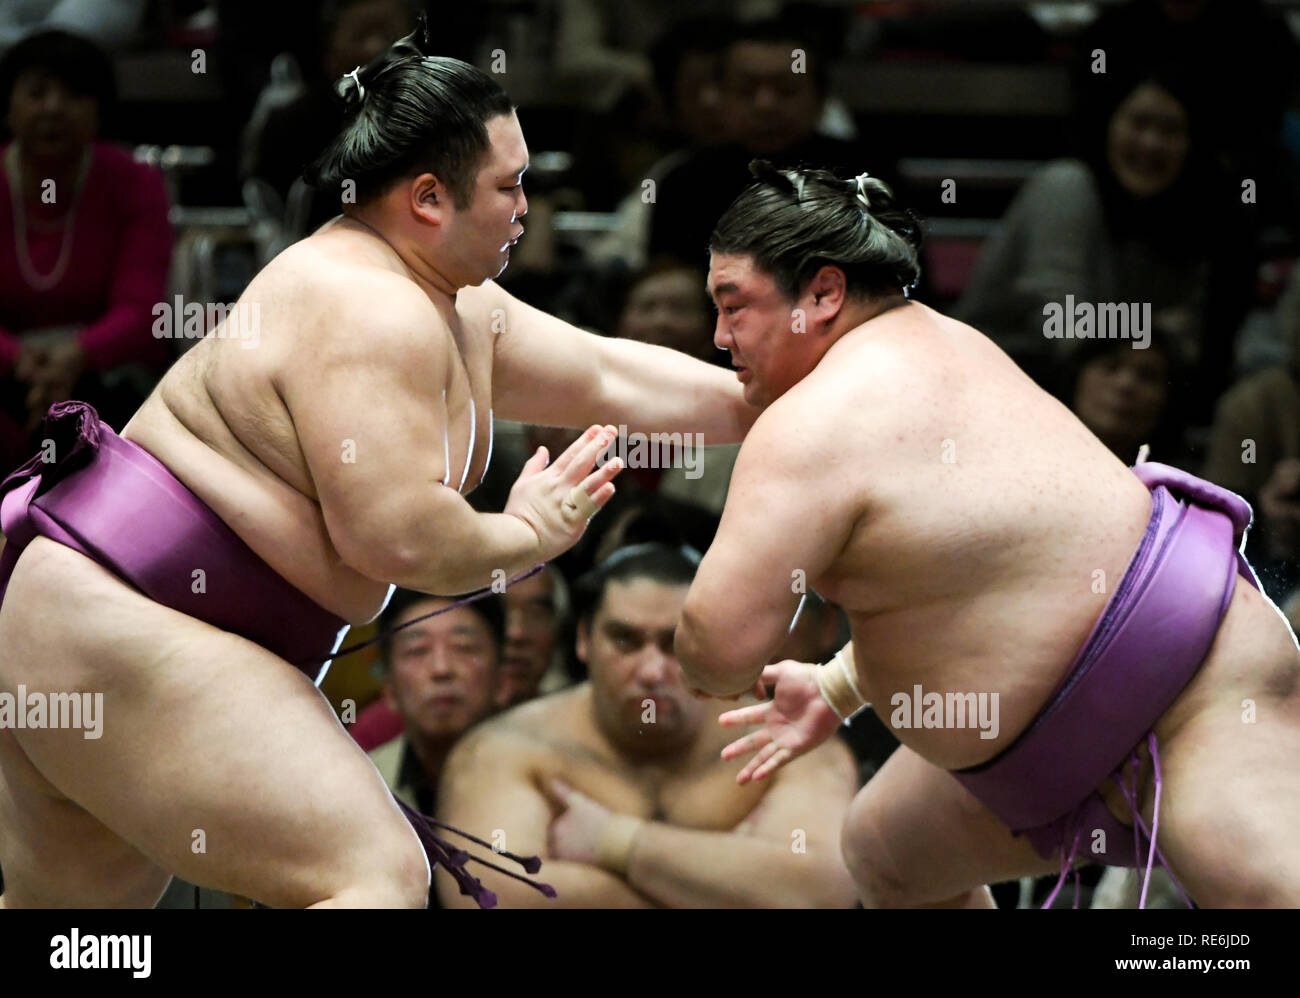 Tokyo Japan th Jan 19 Sumo Wrestlers Eft Asanoyama And Yoshikaze Gripple During The Tokyo Grand Sumo Tournament At Ryogoku Kokugikan On Sunday January 19 Photo By Ramiro Agustin Vargas Tabares